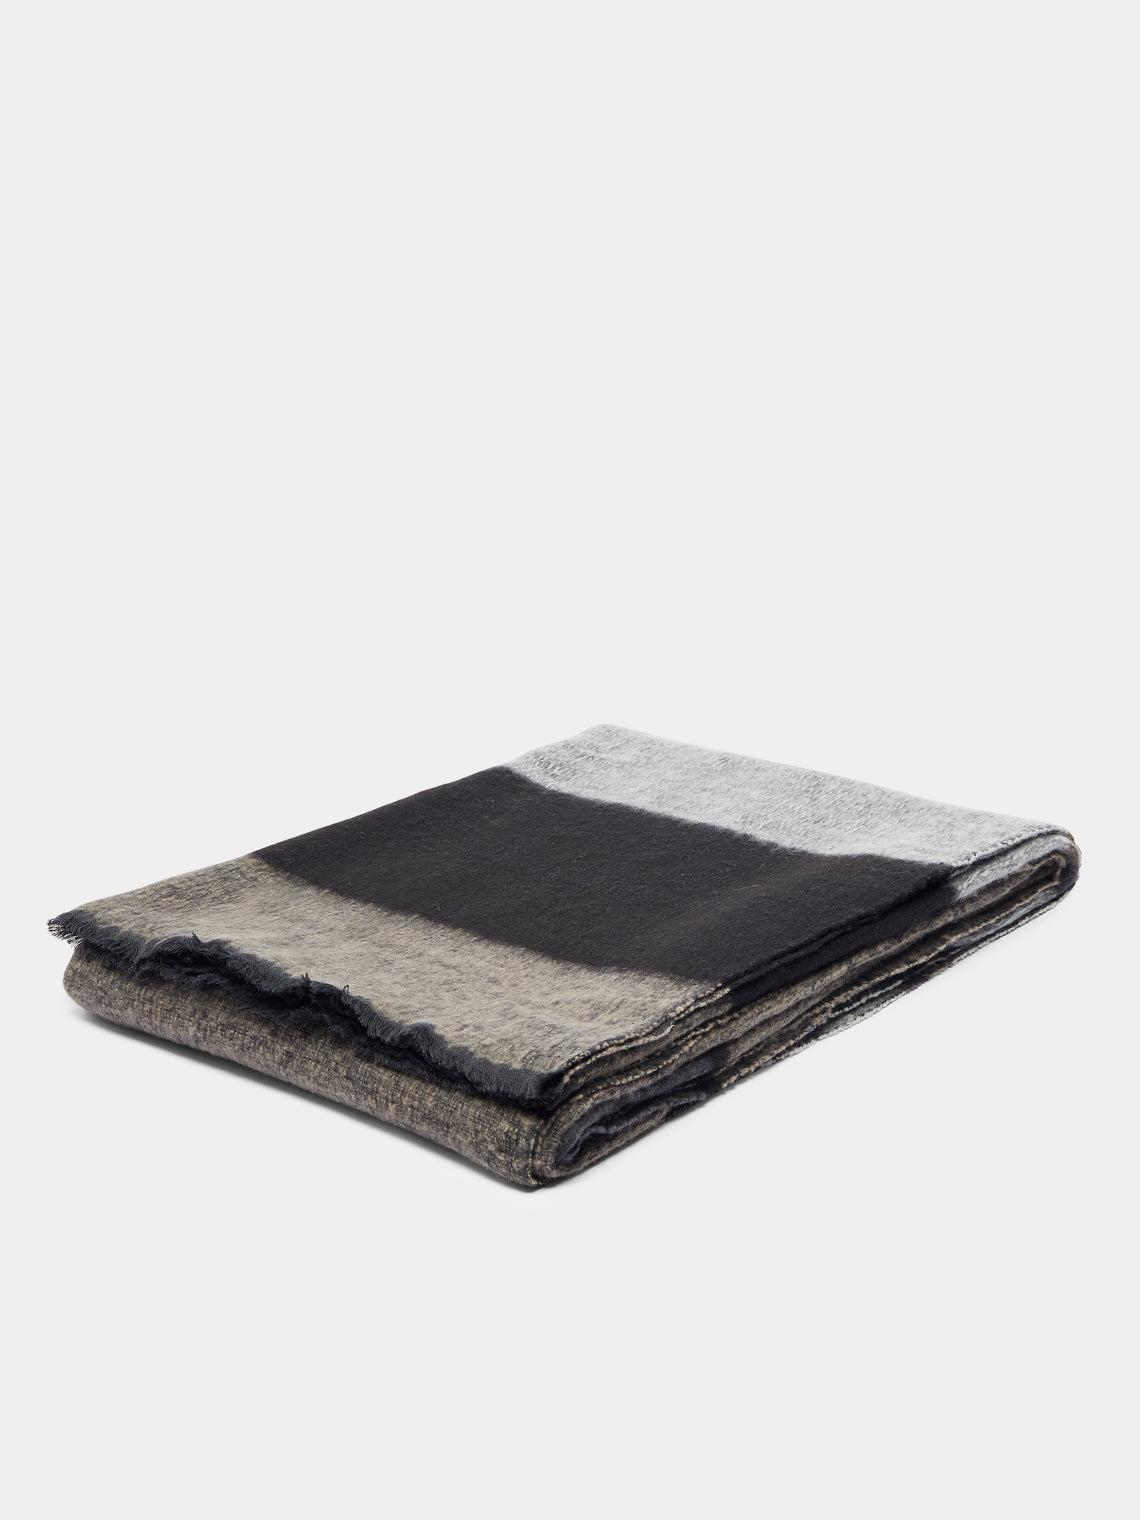 Denis Colomb - Hokkaido Ulliman Cashmere and Cotton Blanket - Grey - ABASK